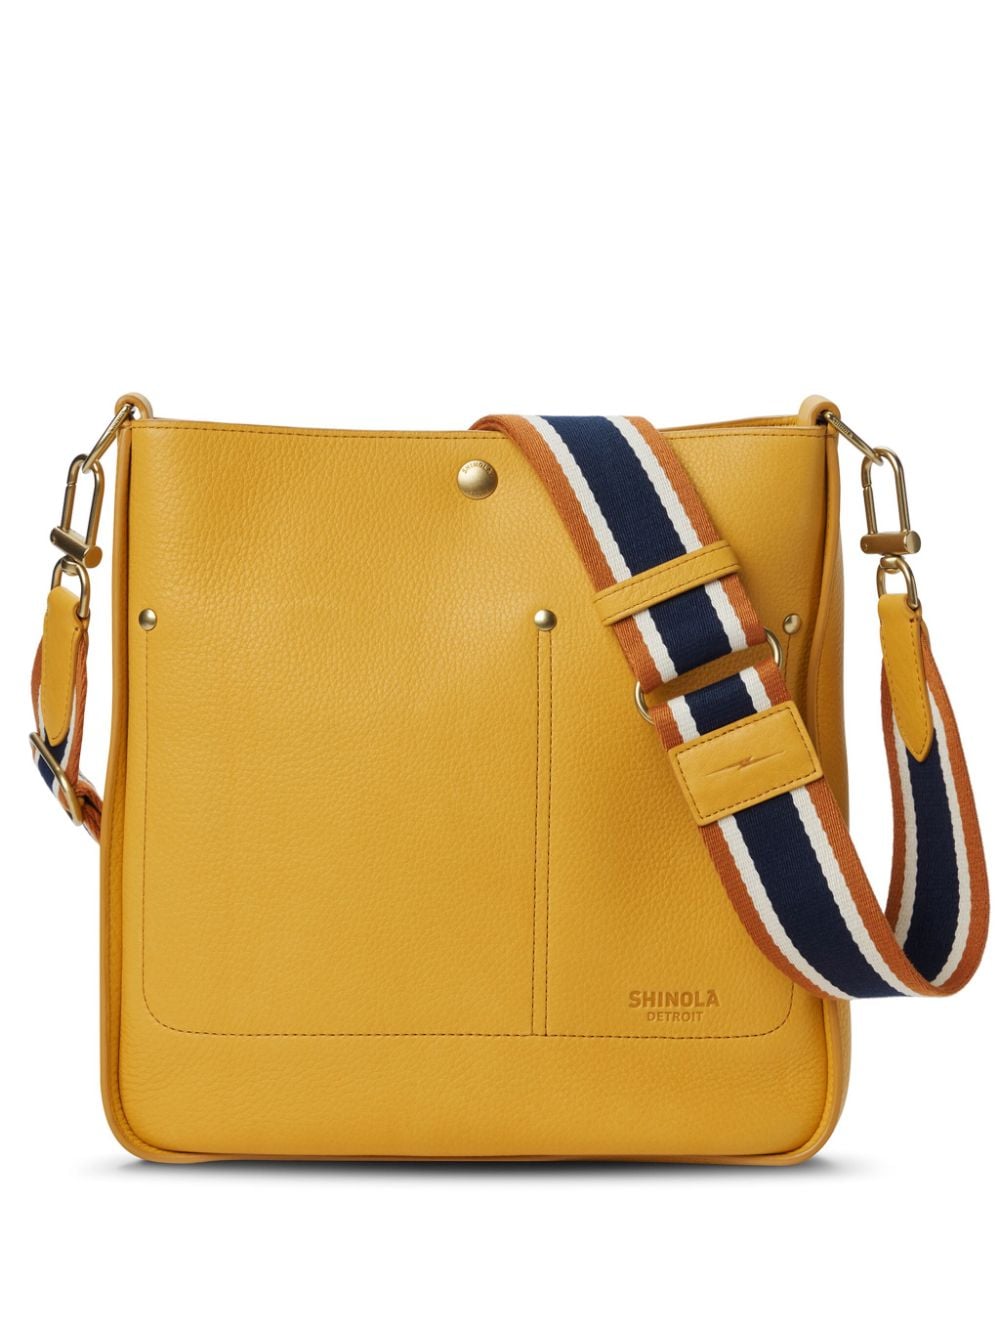 Shinola The Pocket leather crossbody bag - Yellow von Shinola